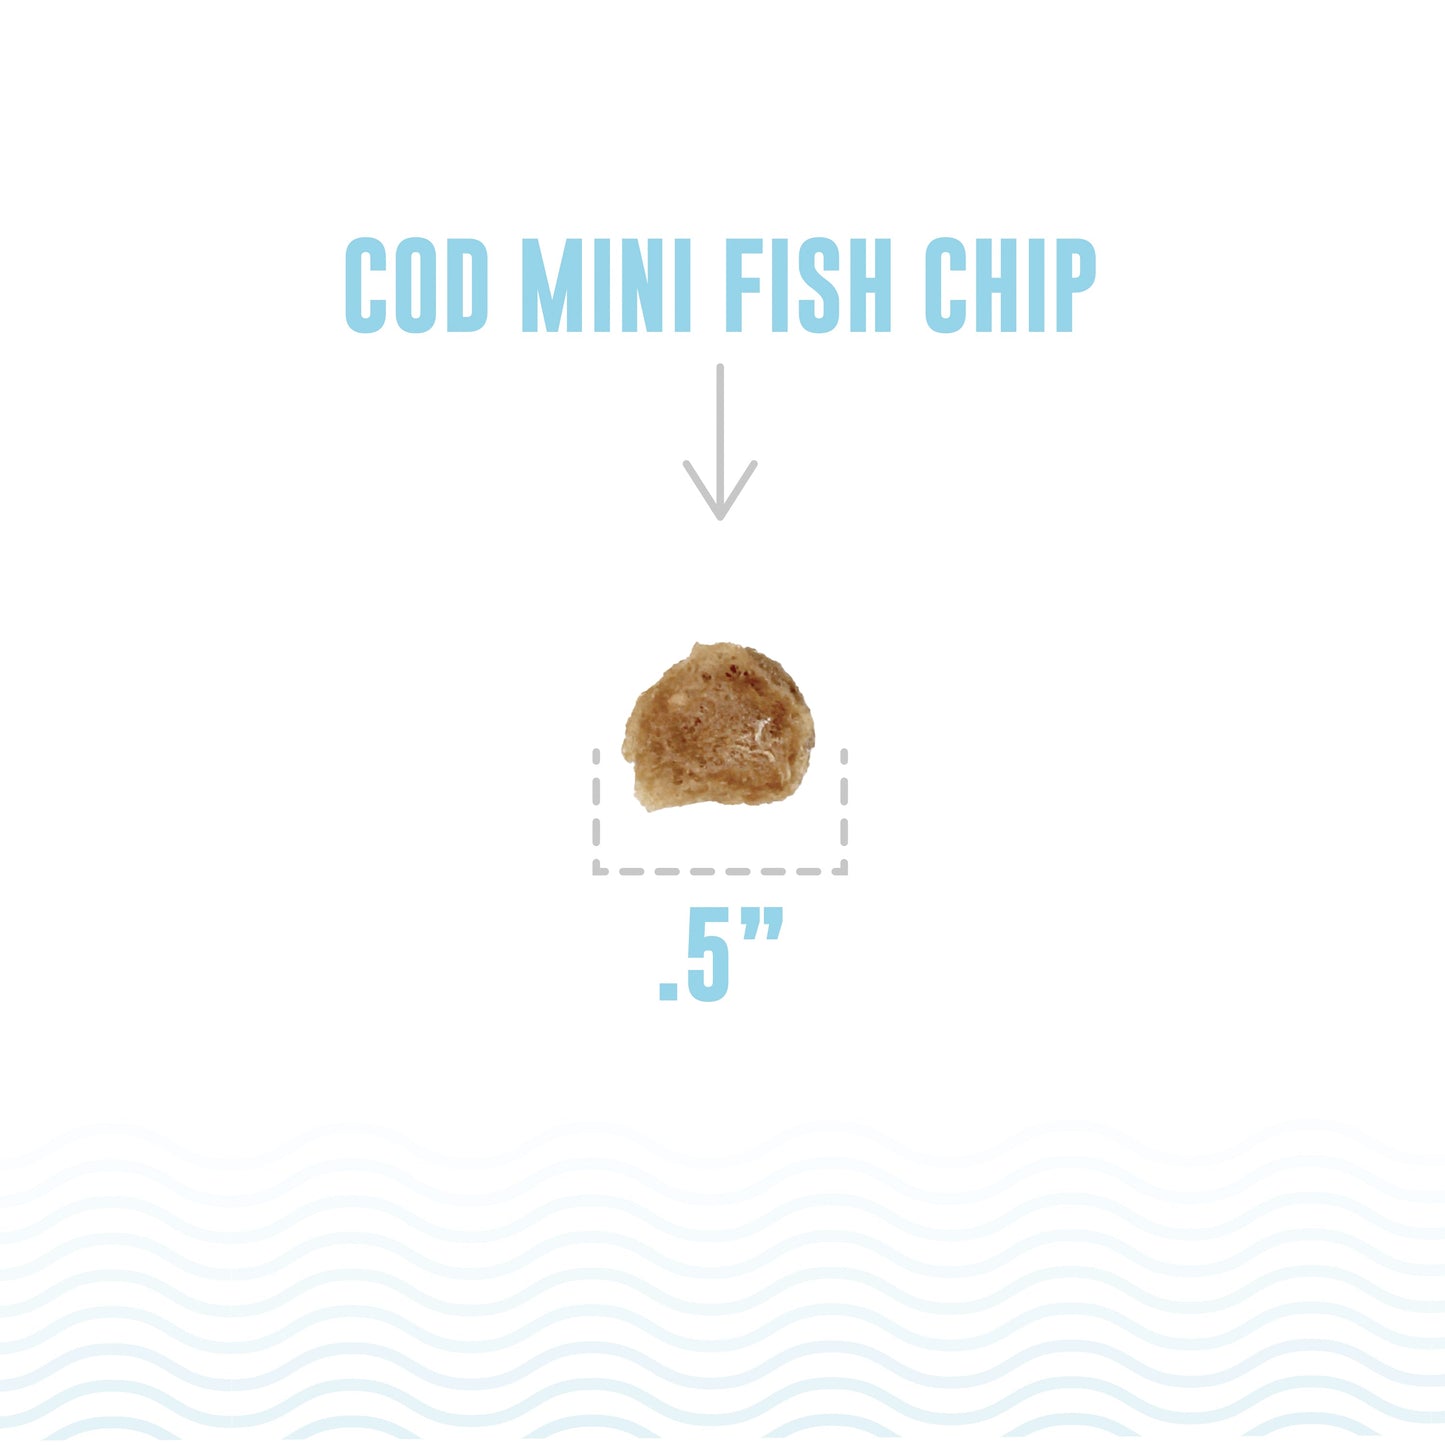 Icelandic+ Cod Chips Dog Treat Mini 2.5oz